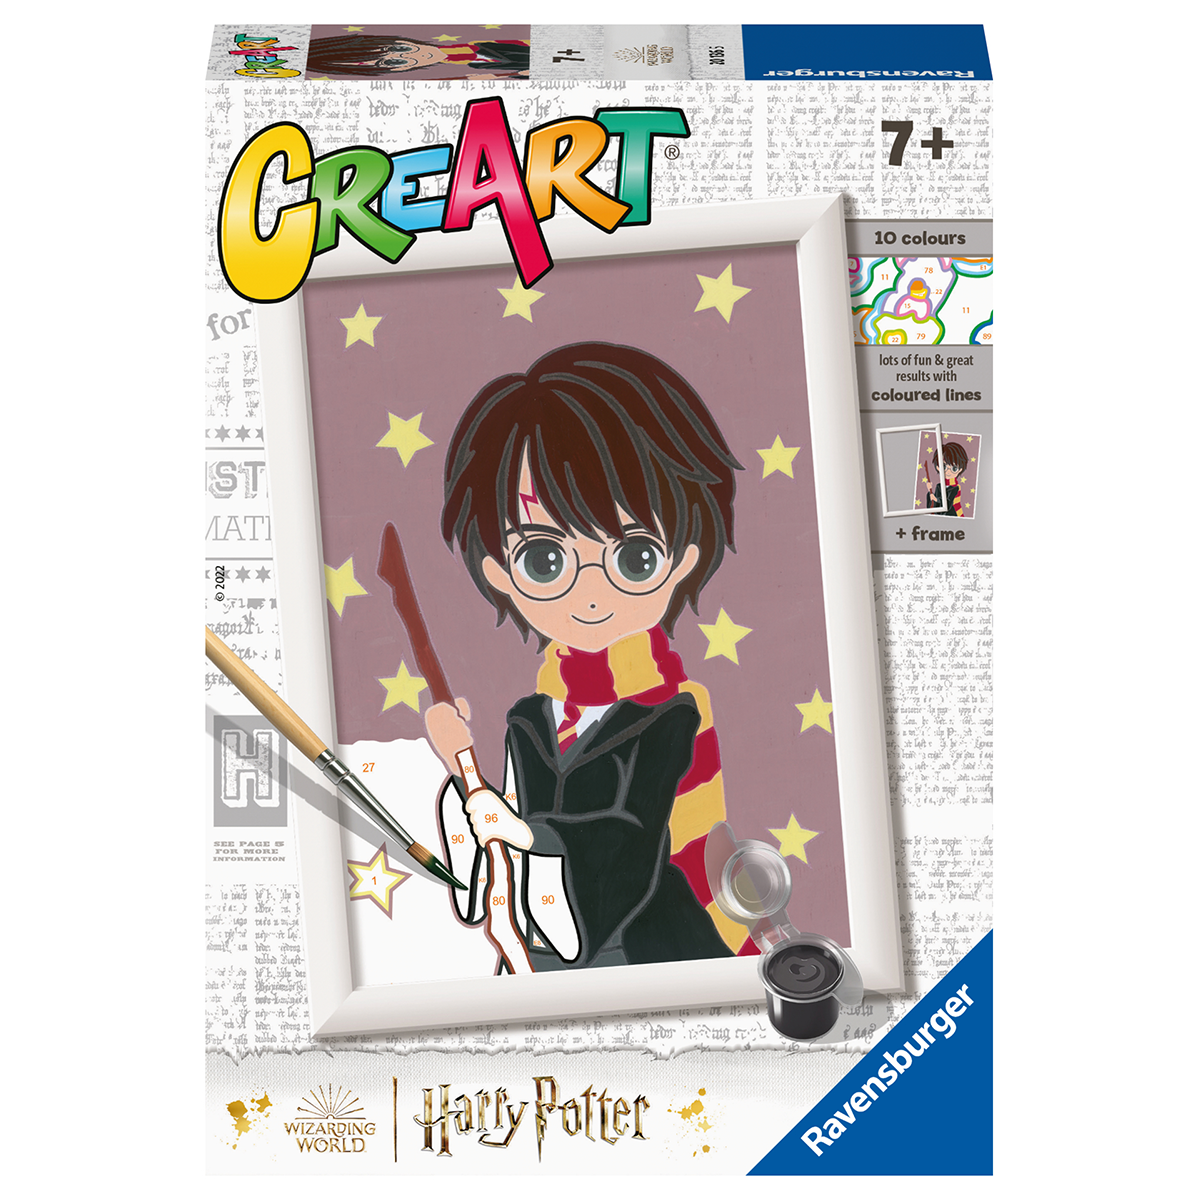 Ravensburger creart per bambini, kit per dipingere con i numeri, 7+, serie e licensed, harry potter - CREART, Harry Potter